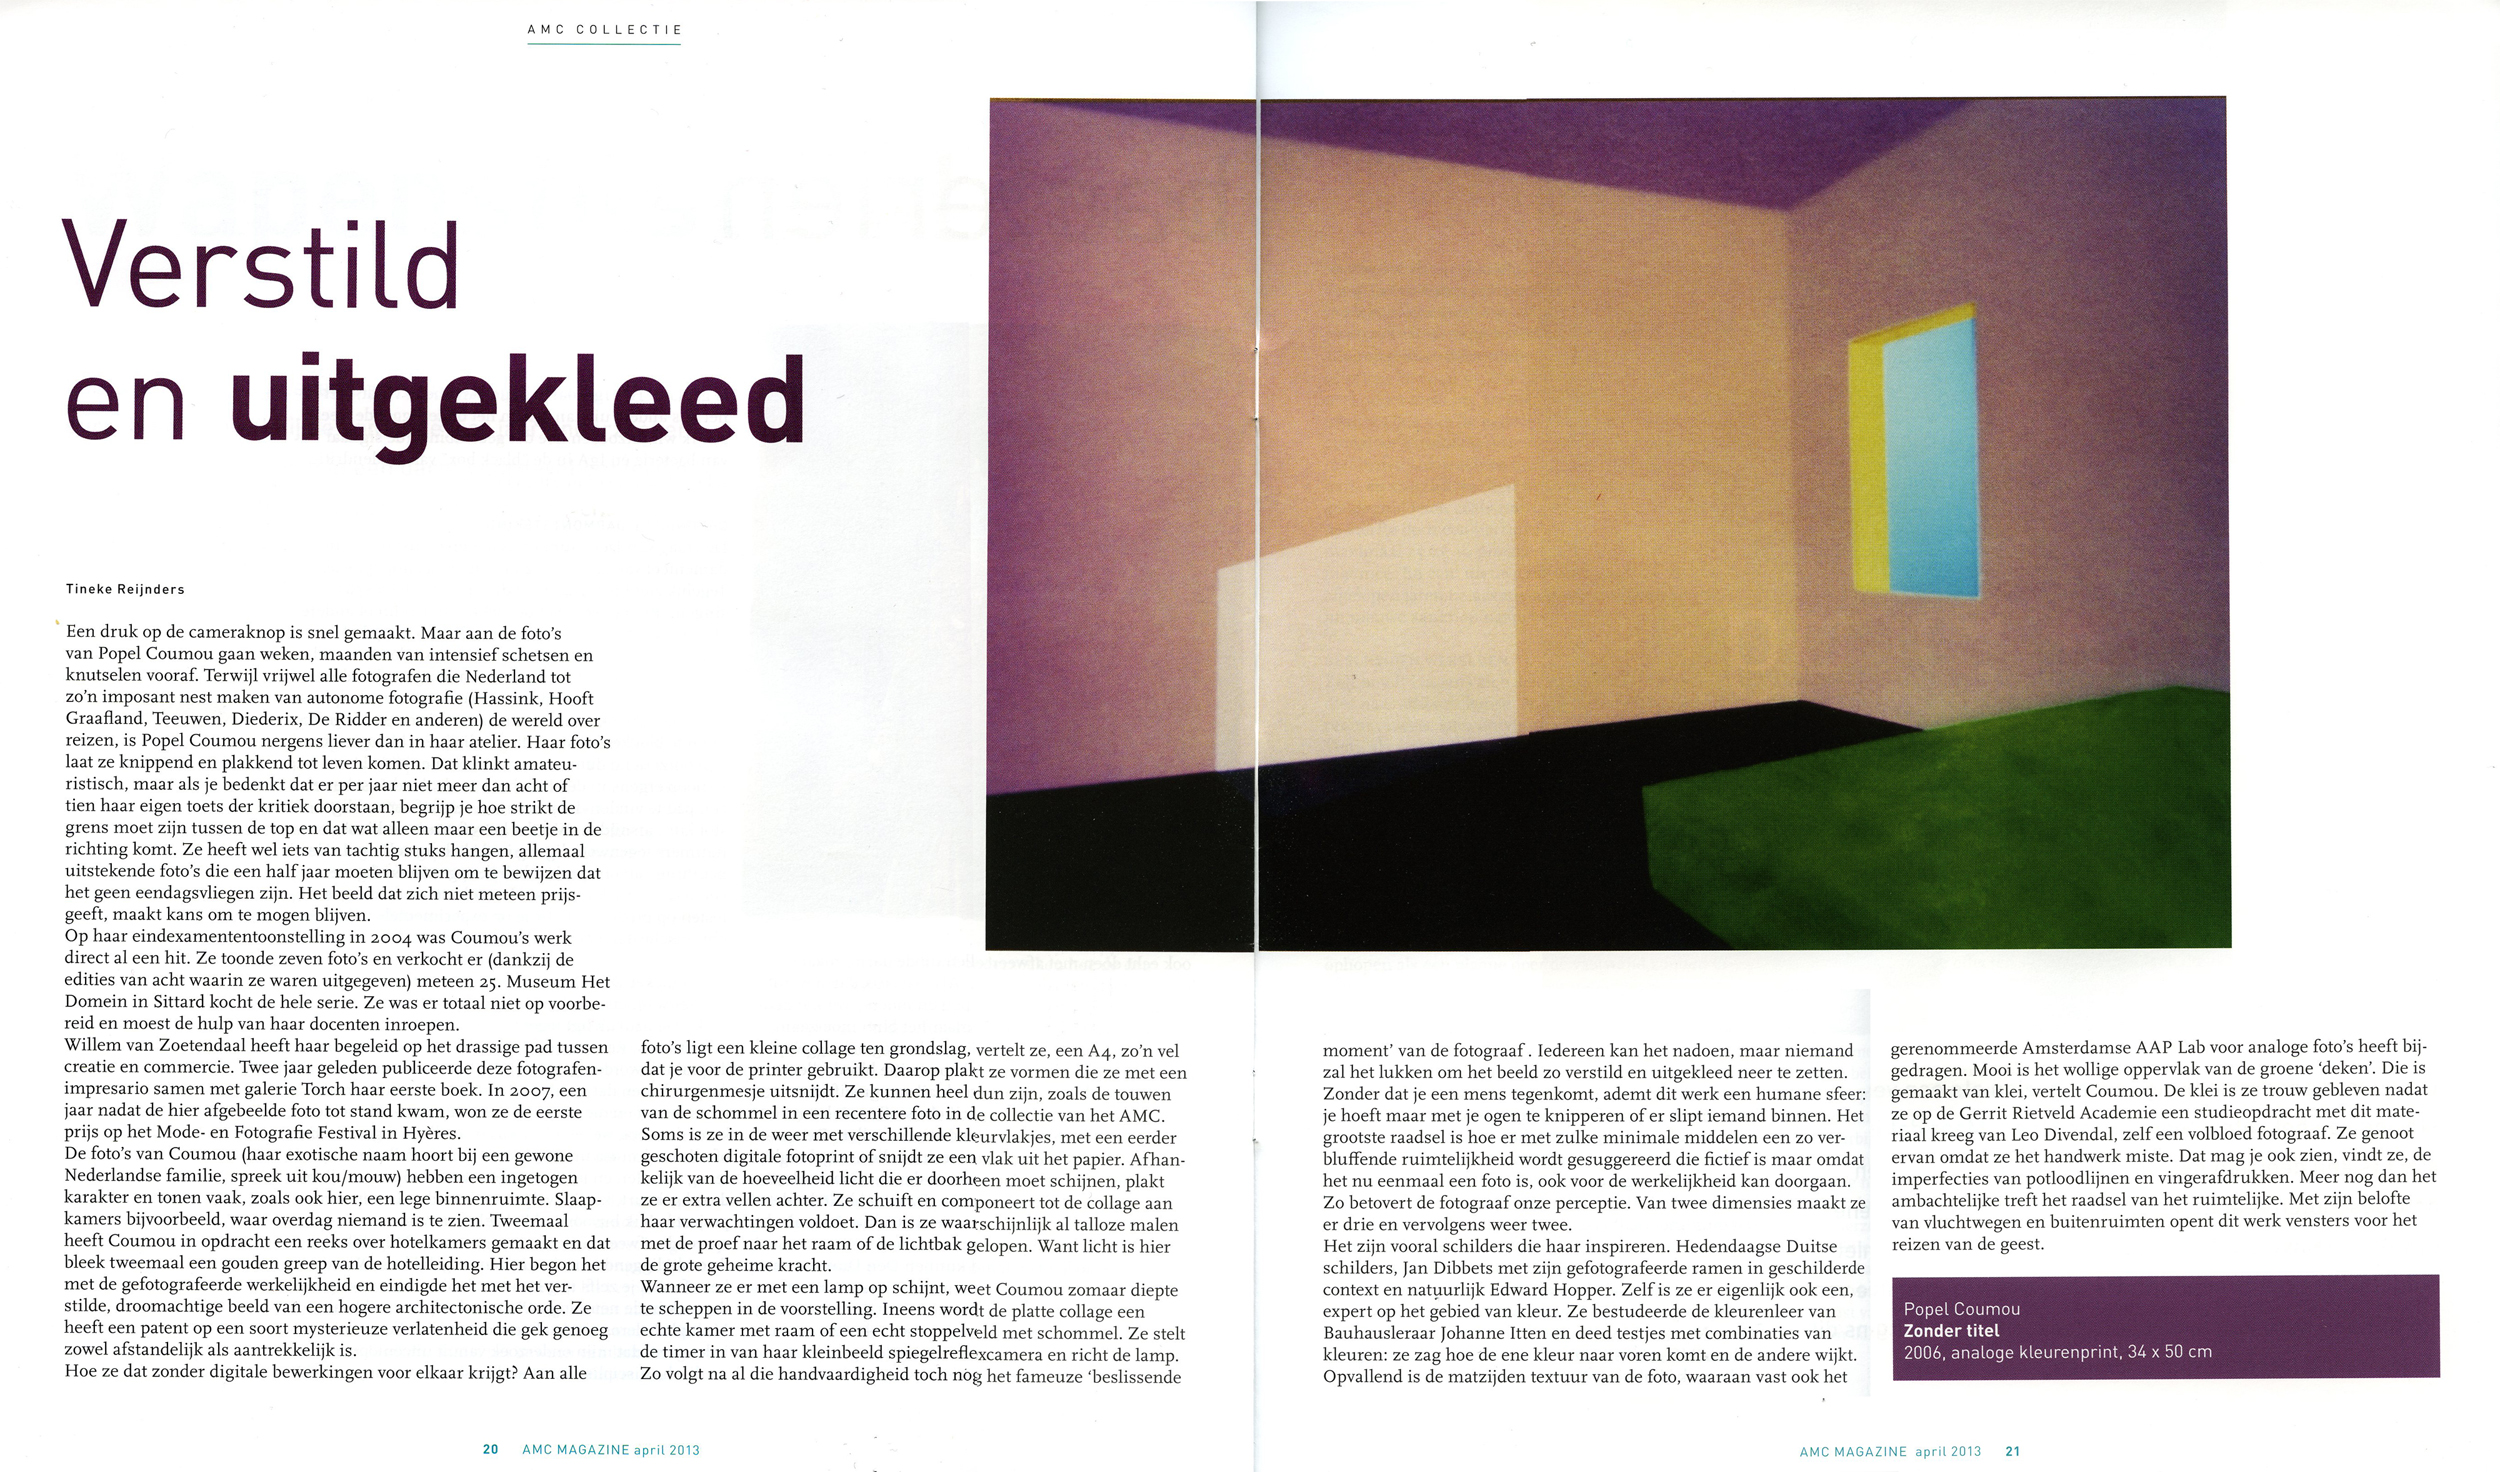 AMC Magazine, april 2013. By Tineke Reijnders